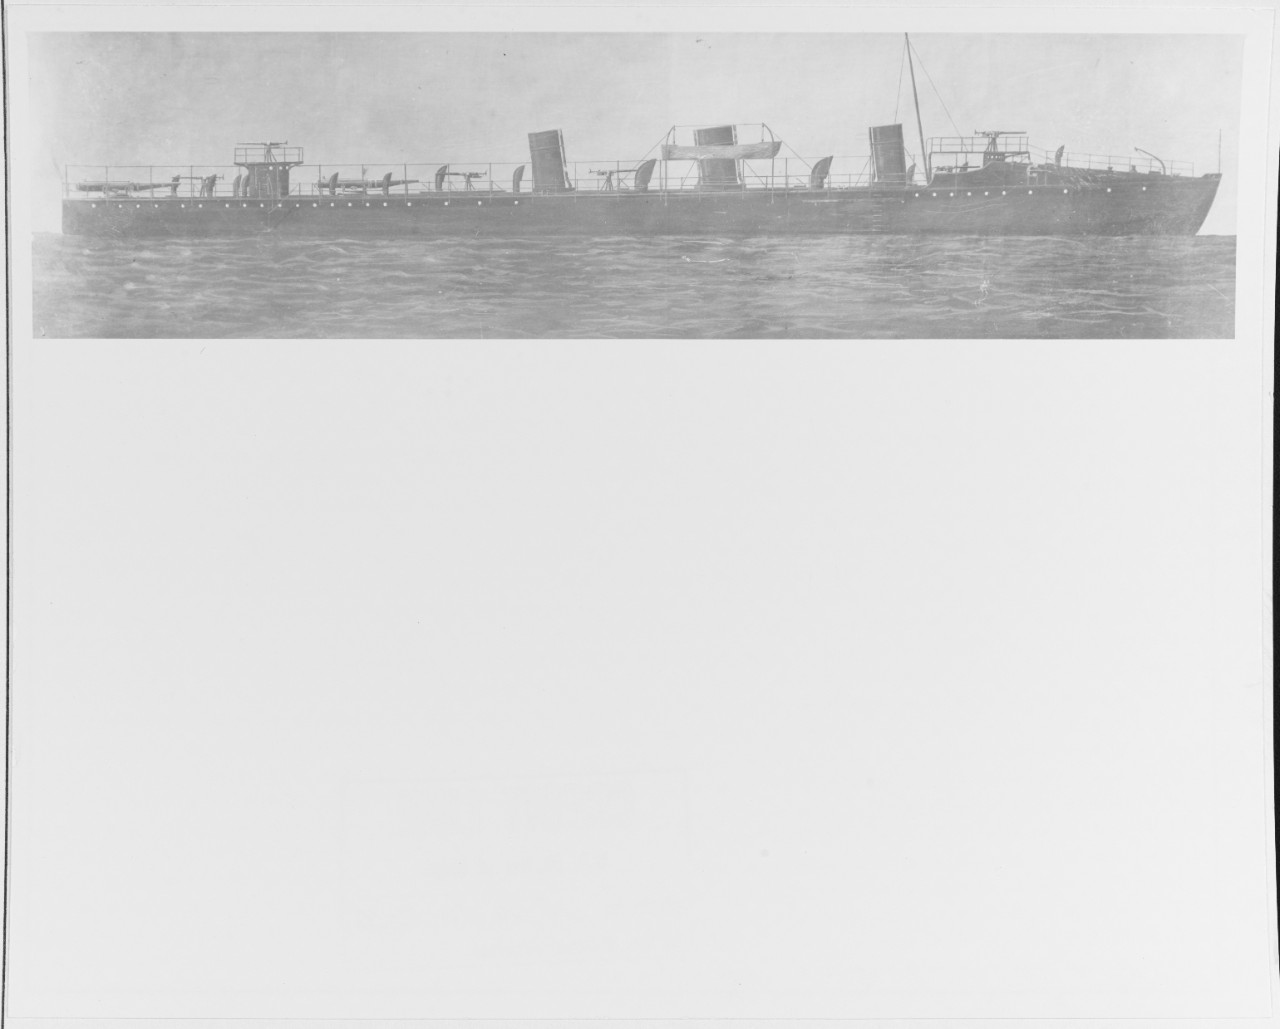 USS STRINGHAM (TB-19)